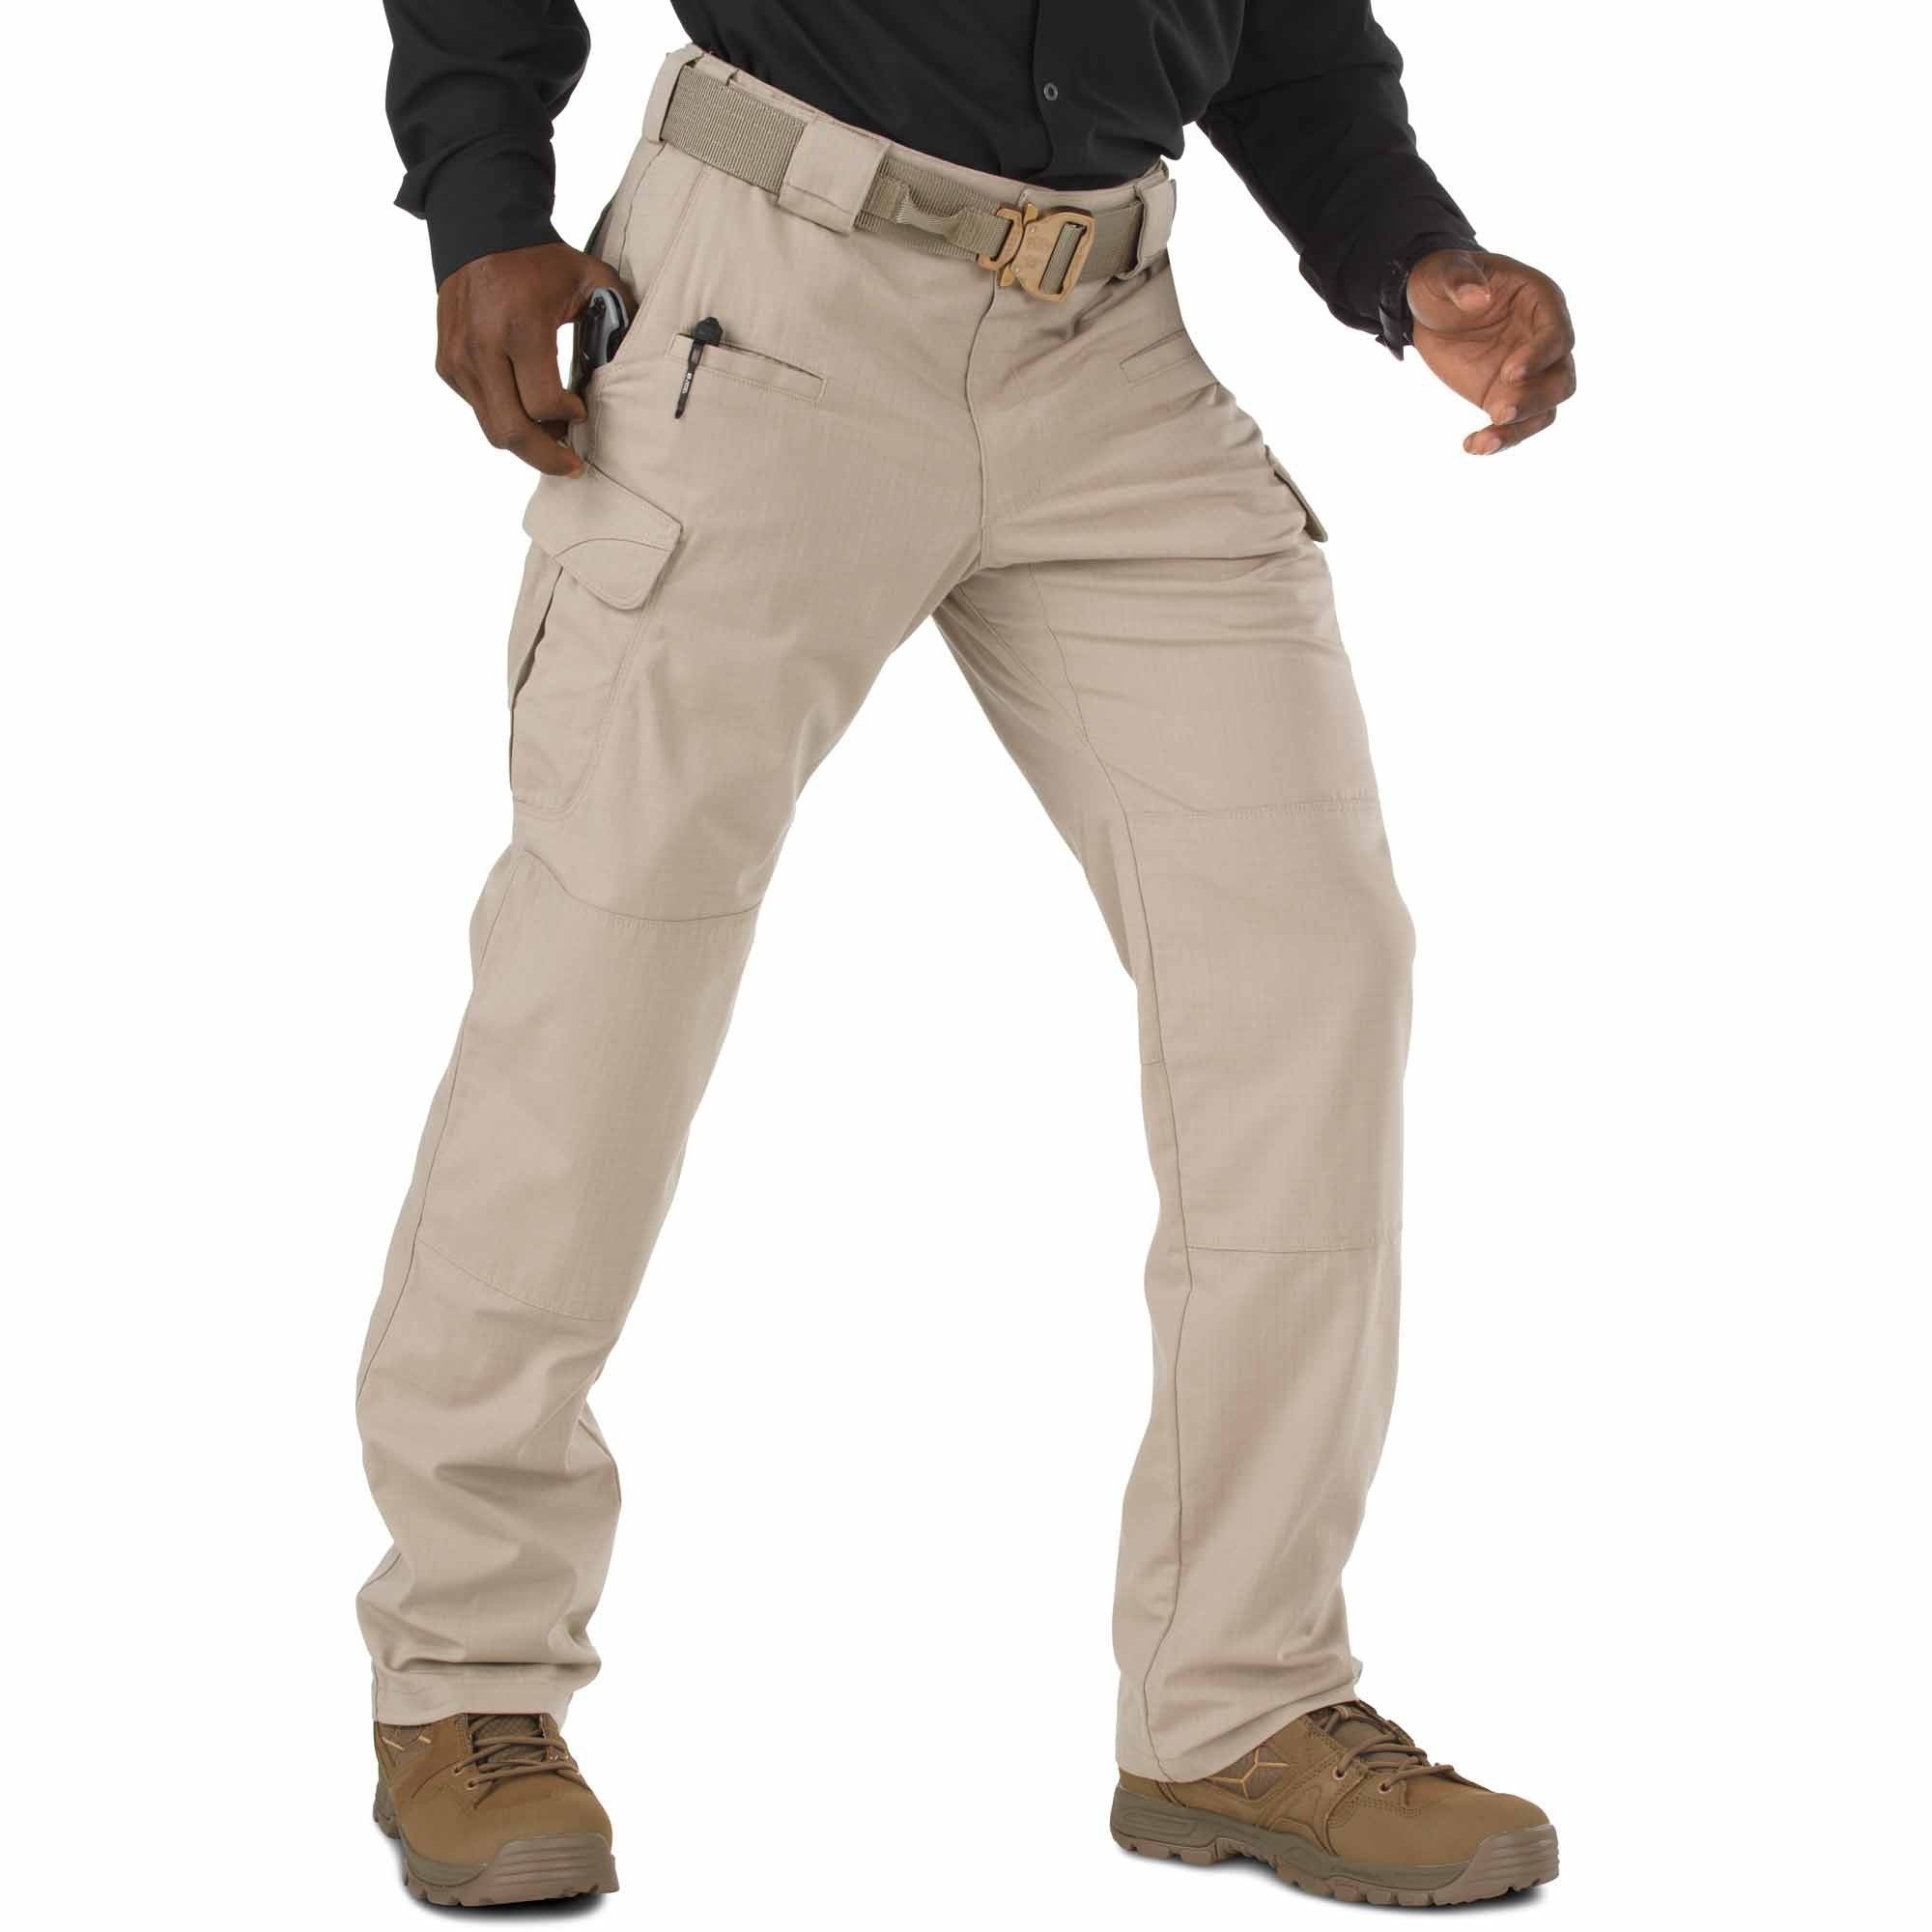 5.11 Tactical Stryke Pants with Flex-Tac - Khaki Pants 5.11 Tactical 28 30 Tactical Gear Supplier Tactical Distributors Australia